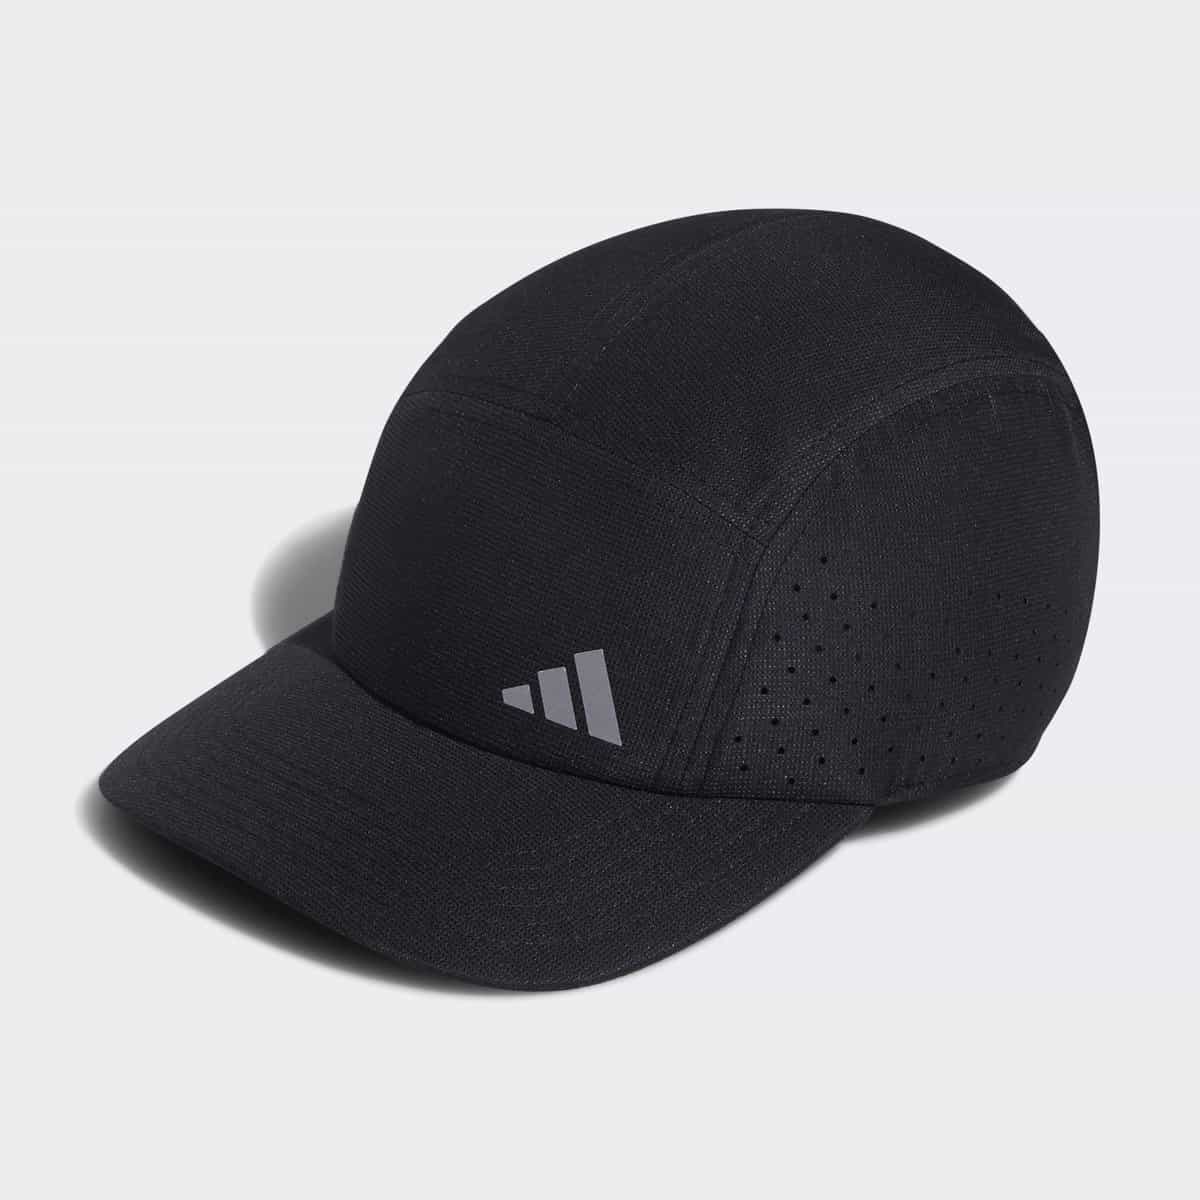 Adidas Men’s Superlite Trainer Hat